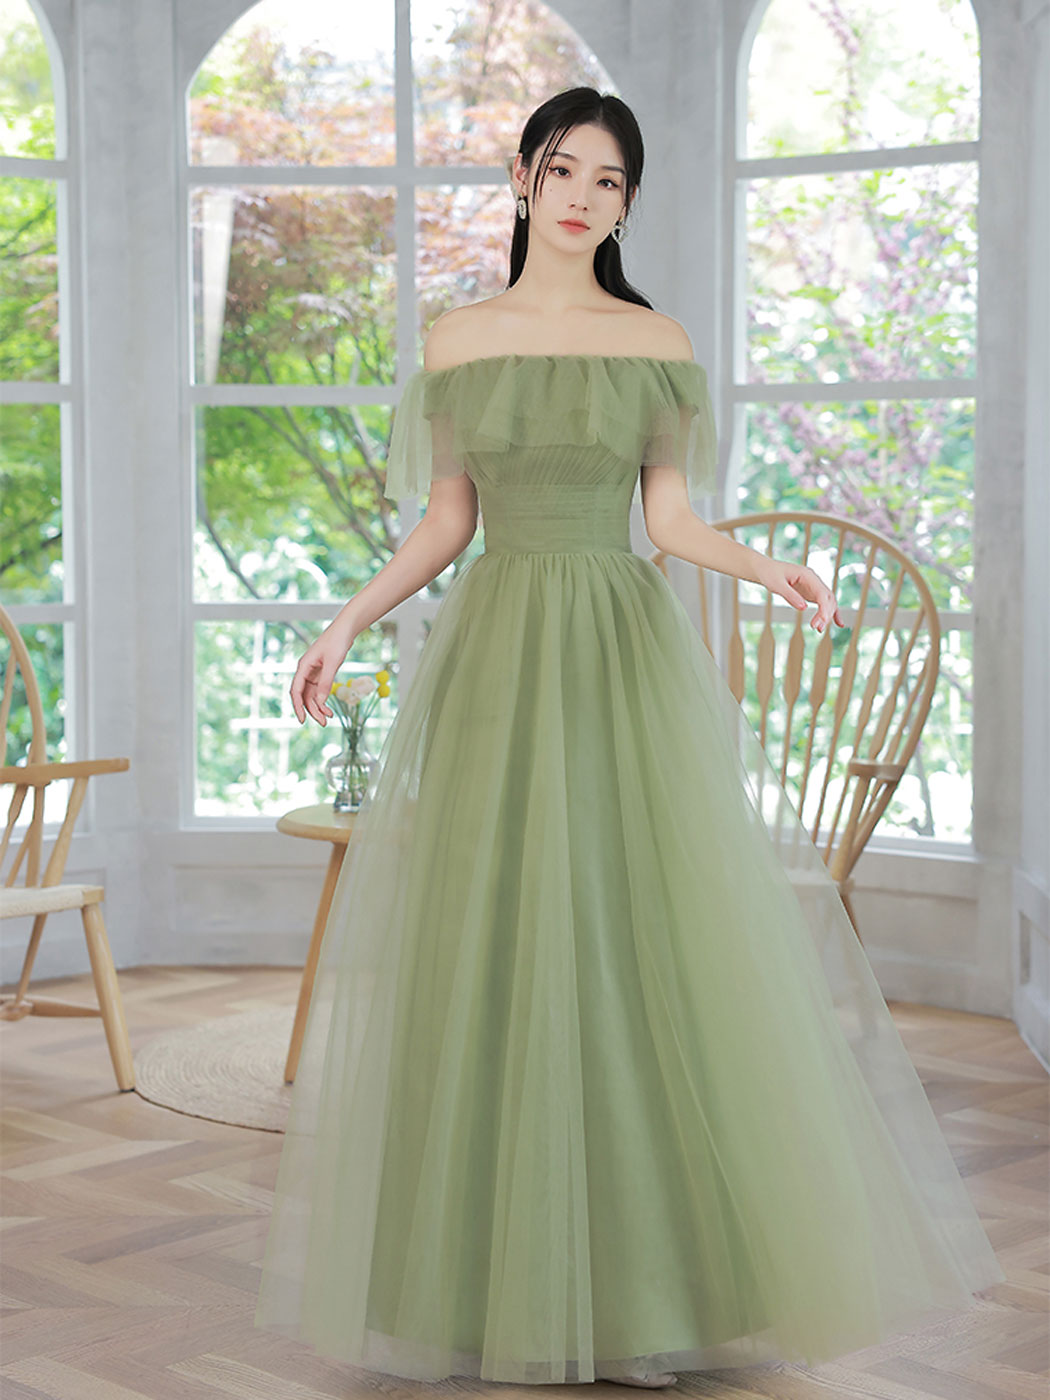 Green v neck tulle long prom gown, green tulle sweet 16 dress – shdress